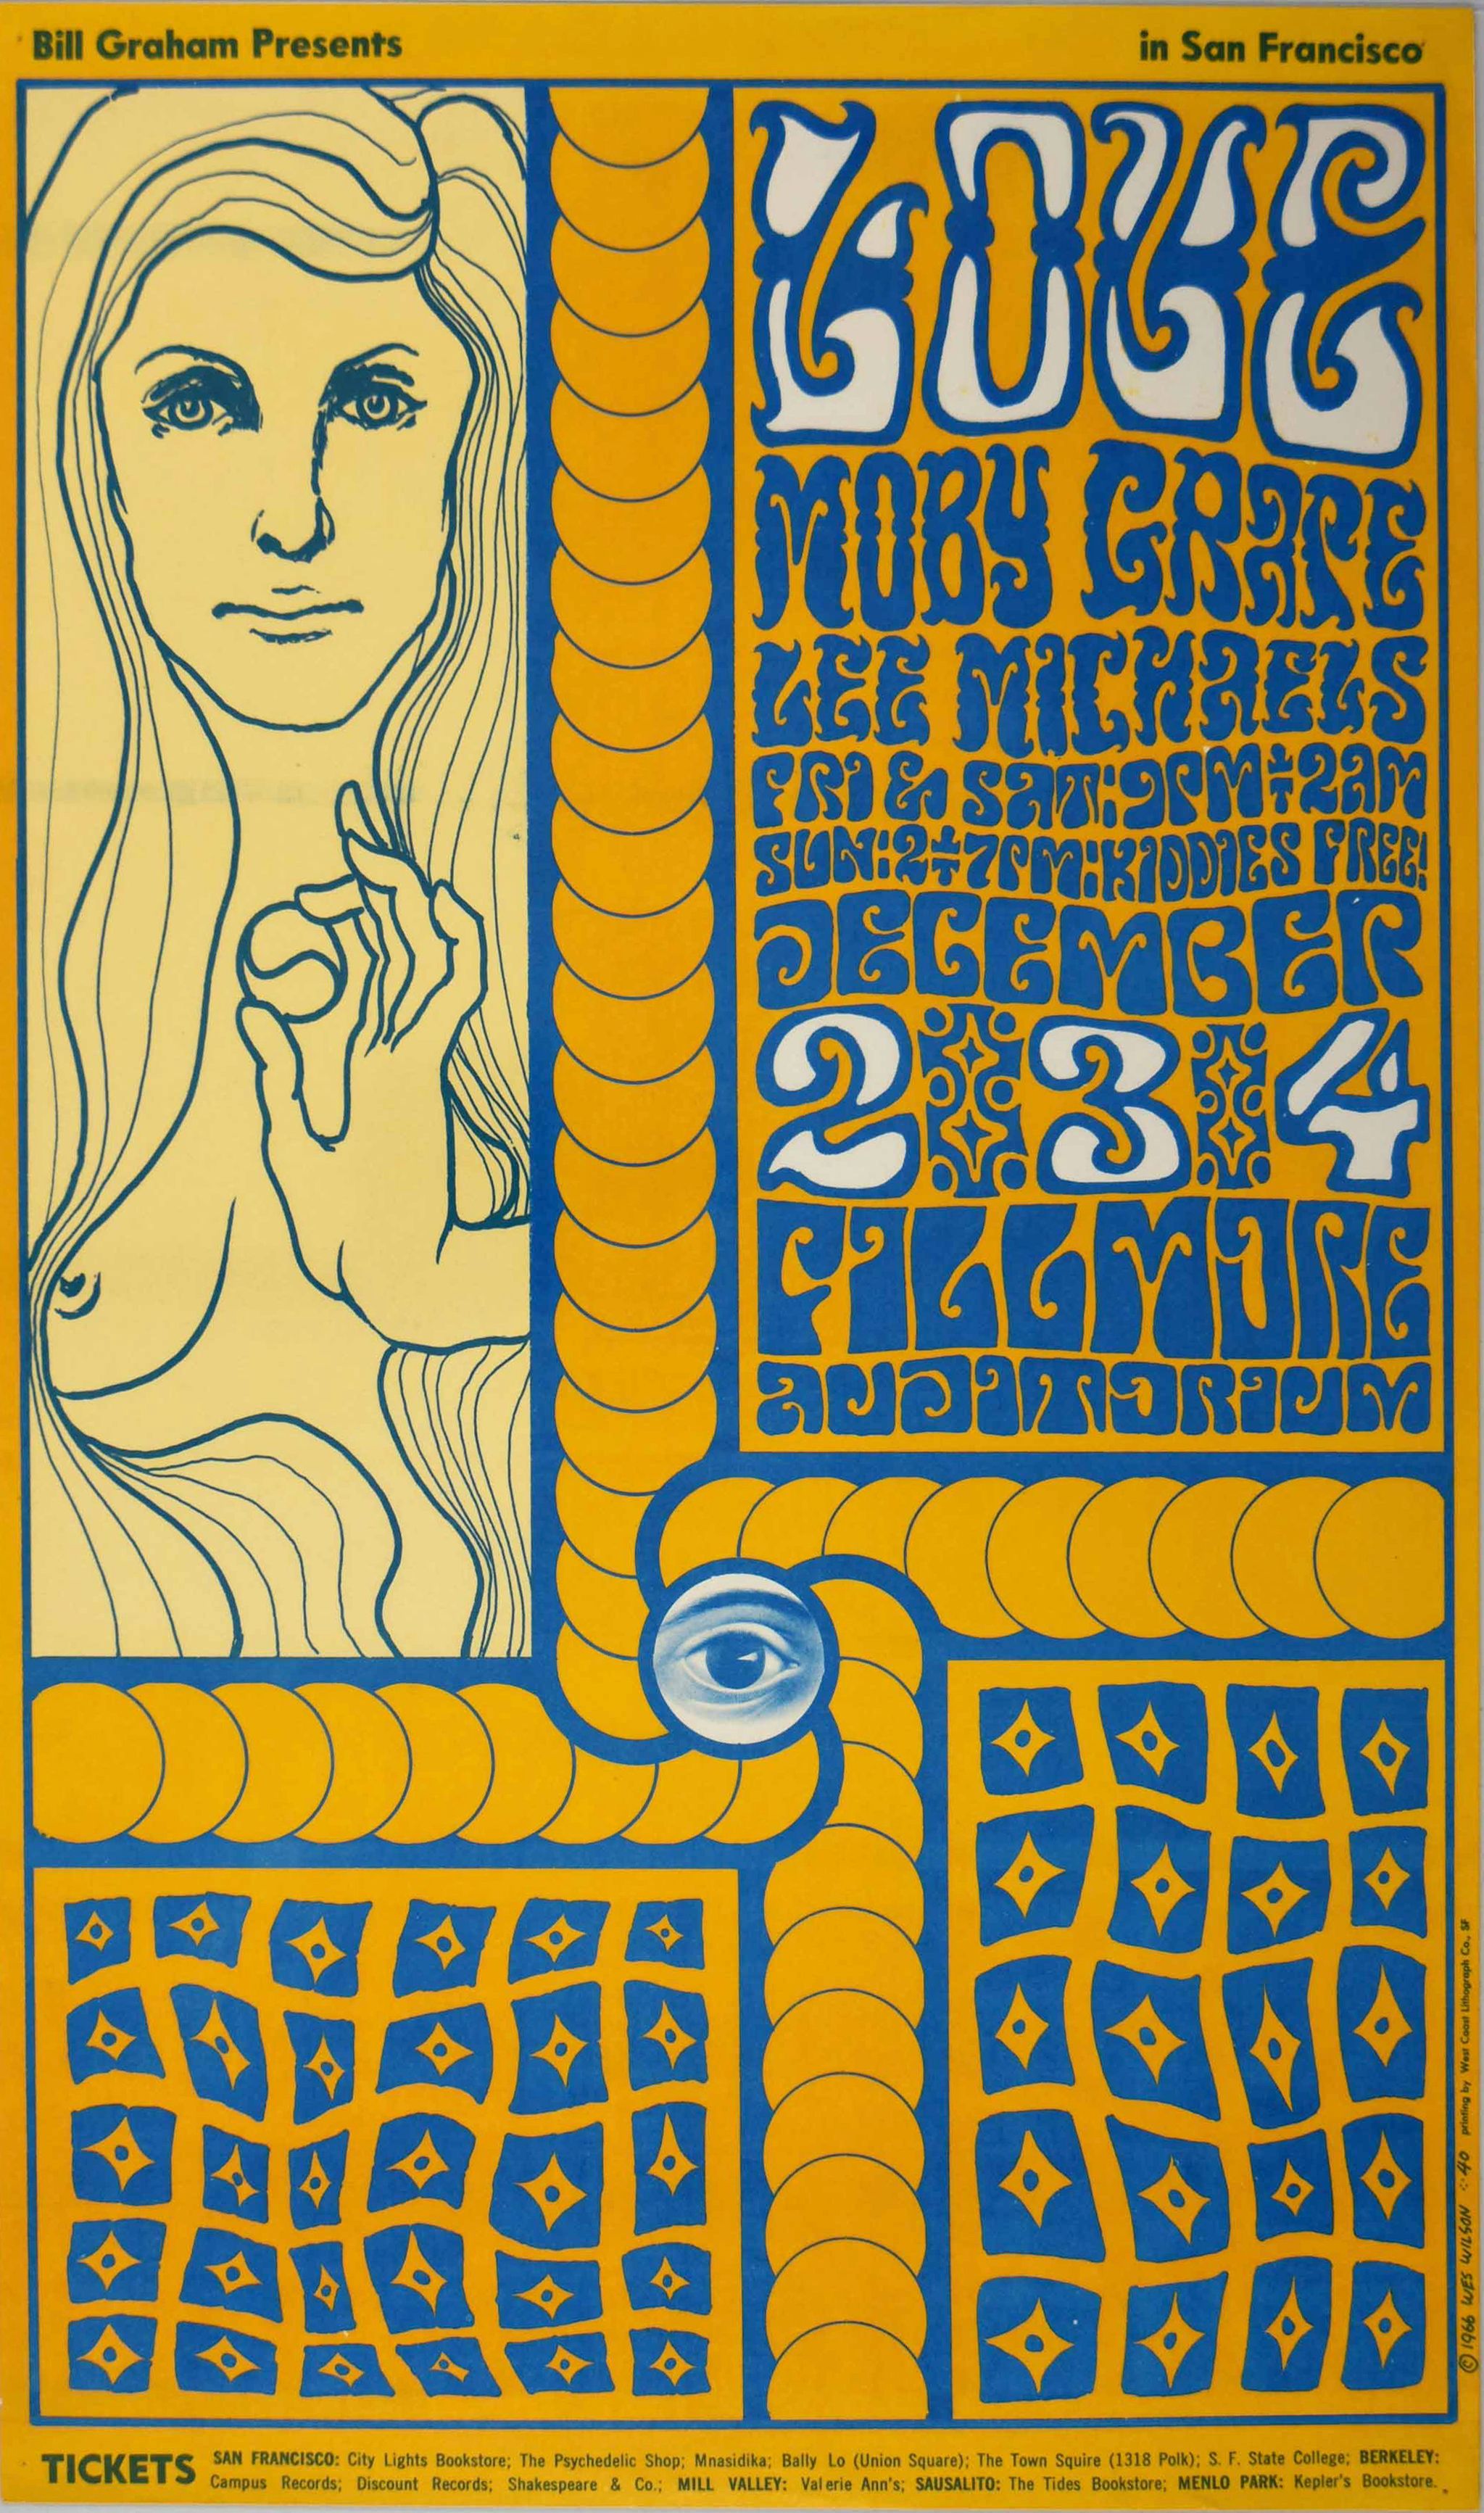 BG-40-OP-1 Love The Fillmore 1966 Concert Poster